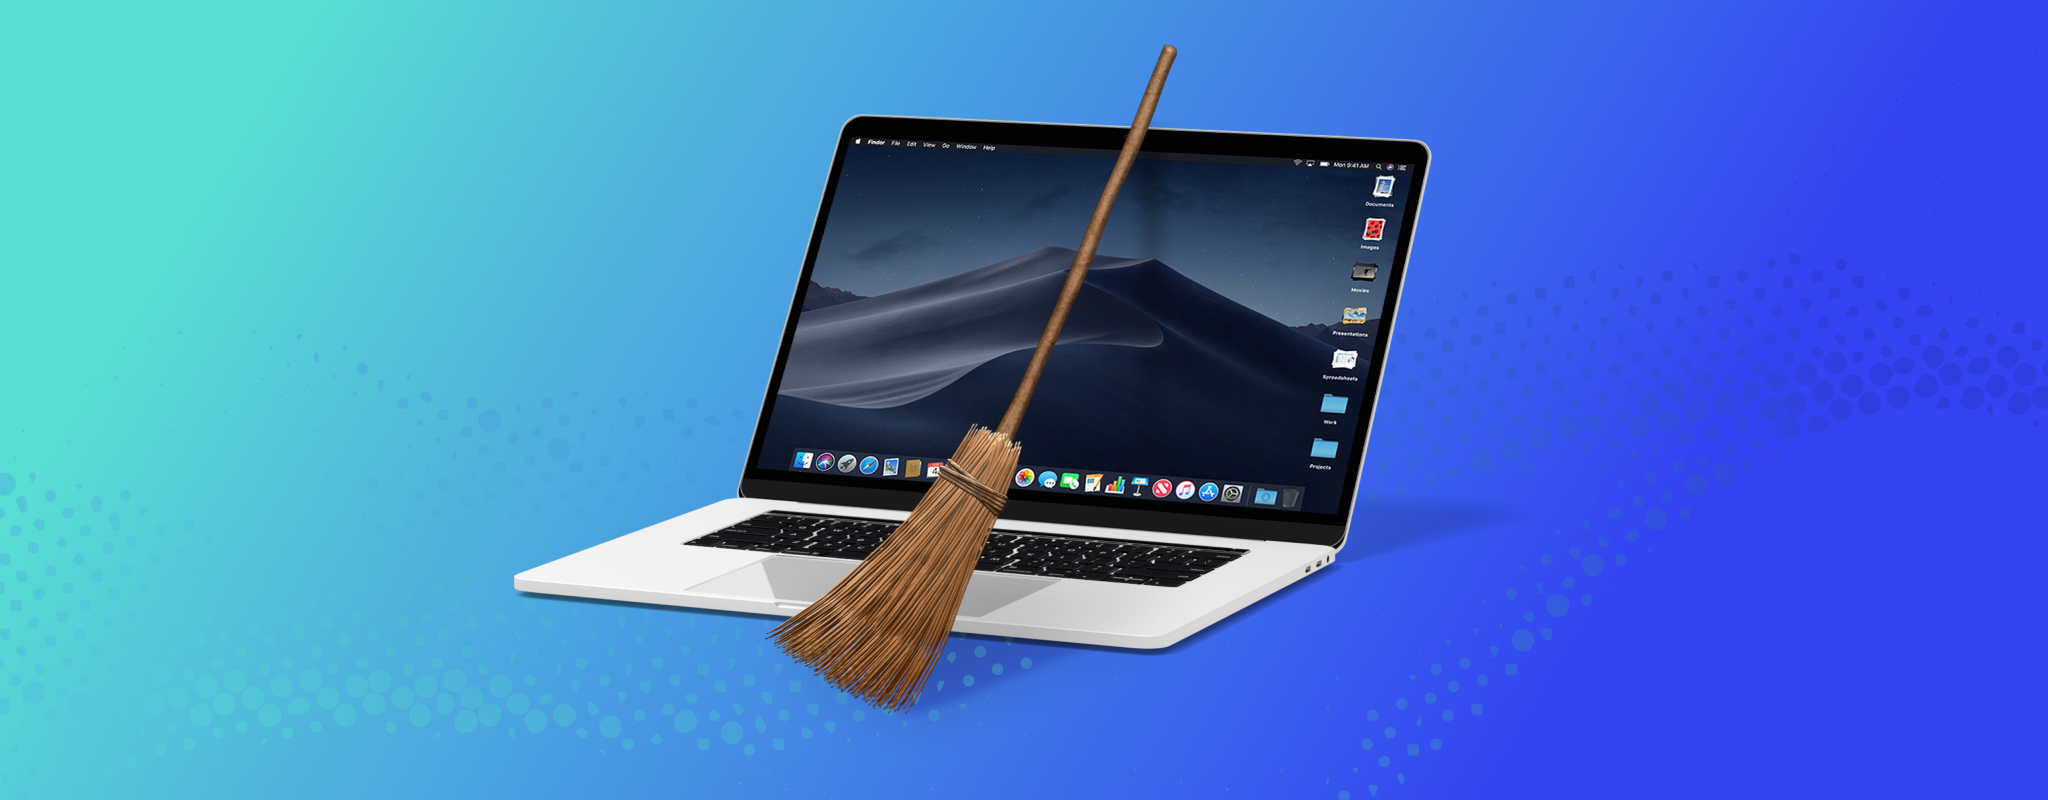 iphone cleaner mac